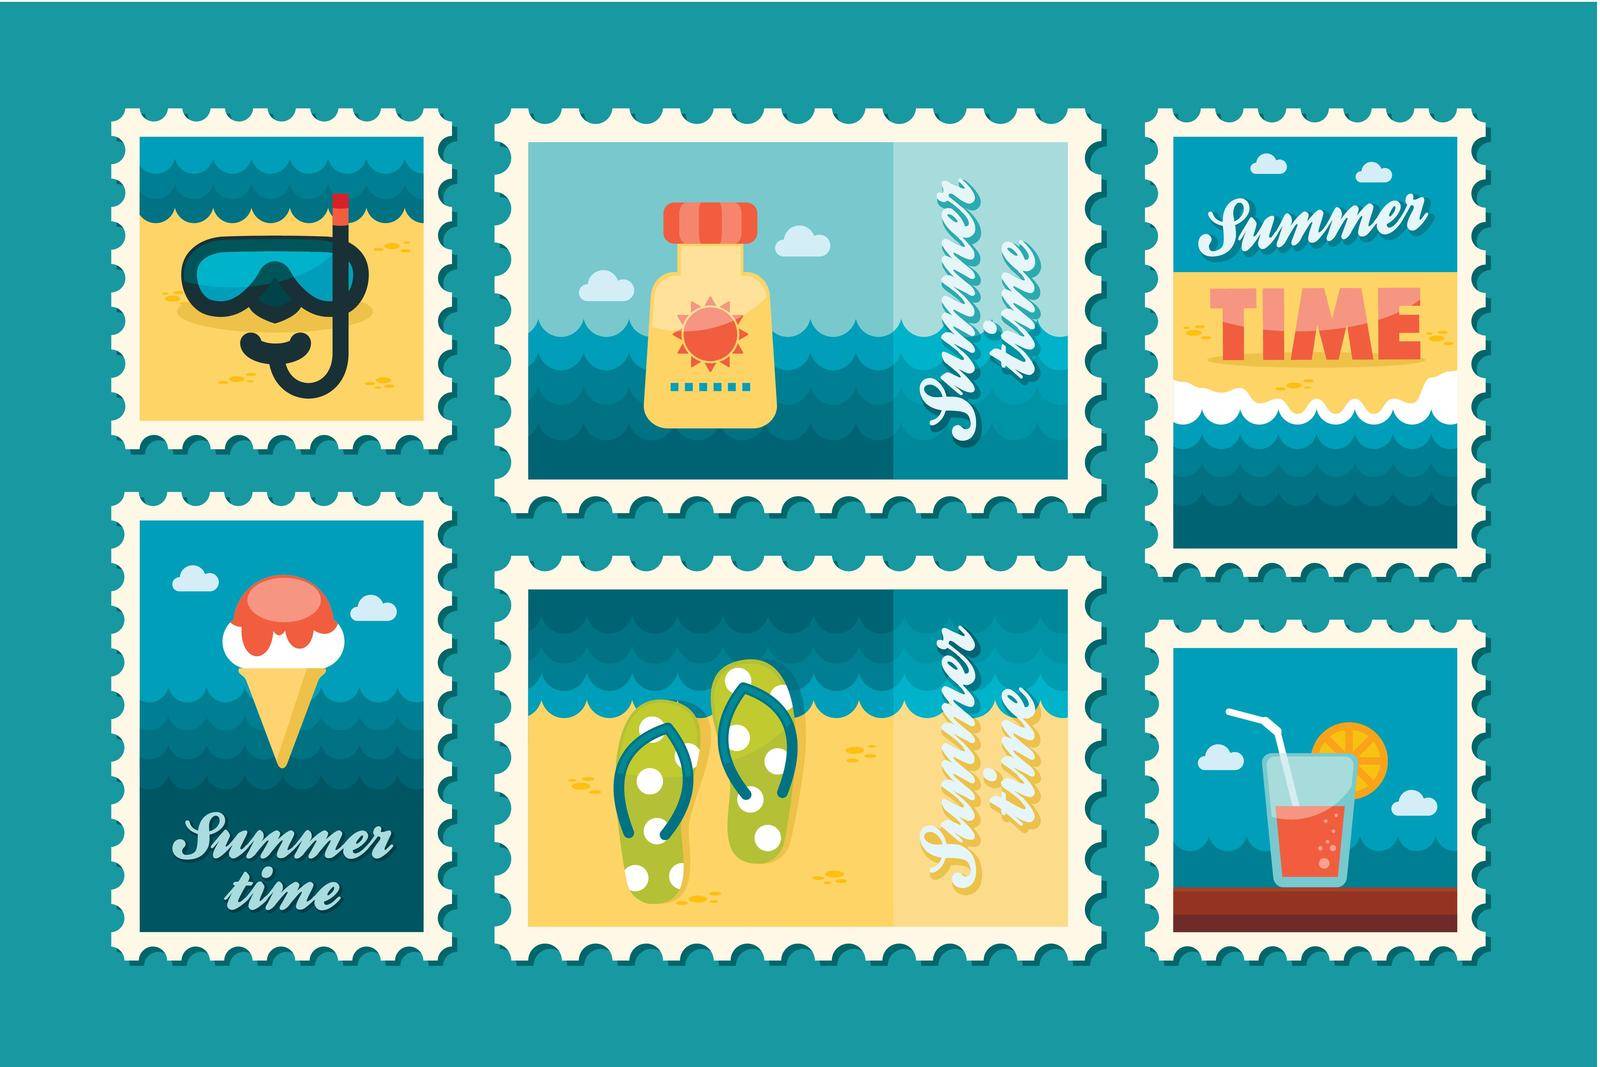 Summertime stamp set flat by nosik